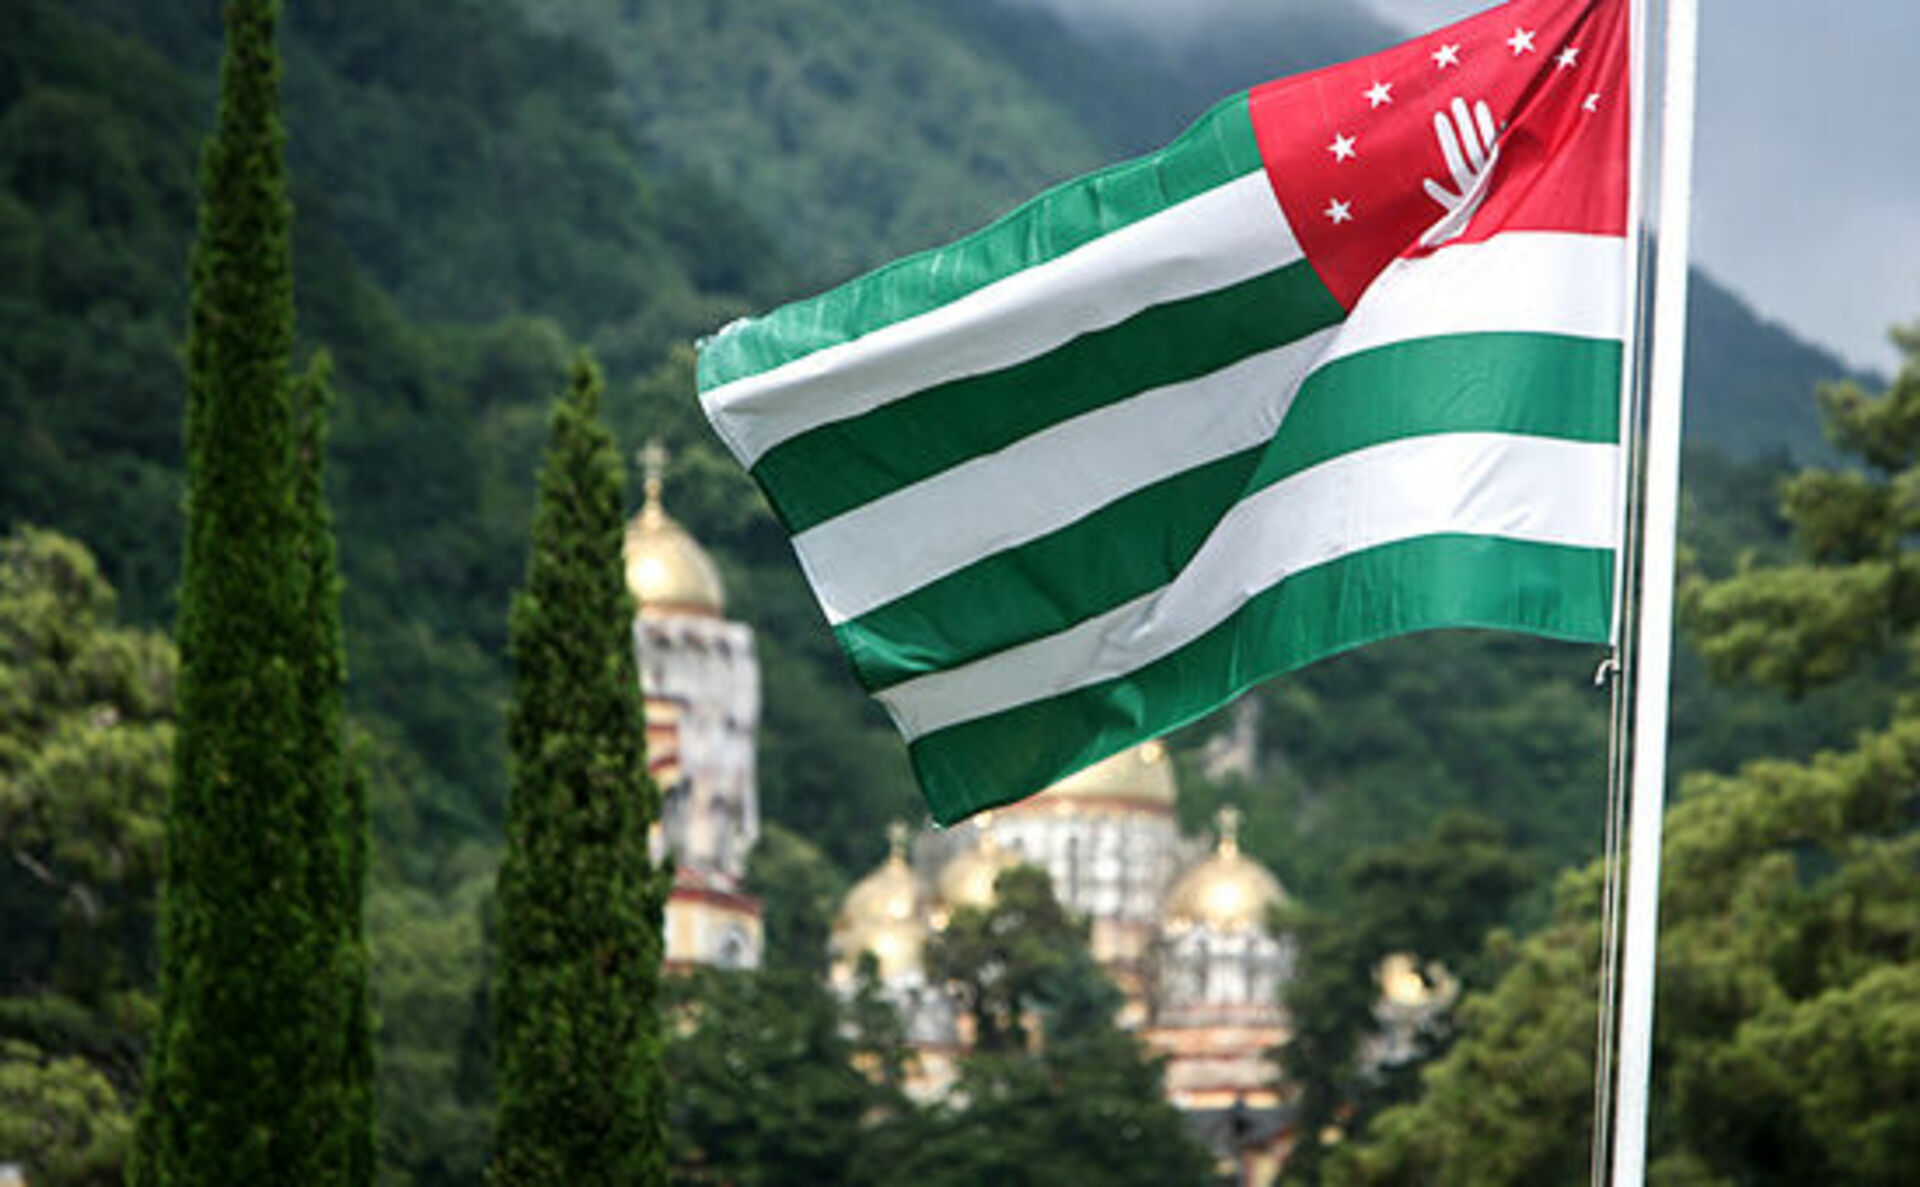 Сообщение россия абхазия. Флаг Республики Абхазия. Апсны Абхазия флаг. Флаг Республики Абхазия флаг Республики Абхазия. Абхазия Гагра флаг.